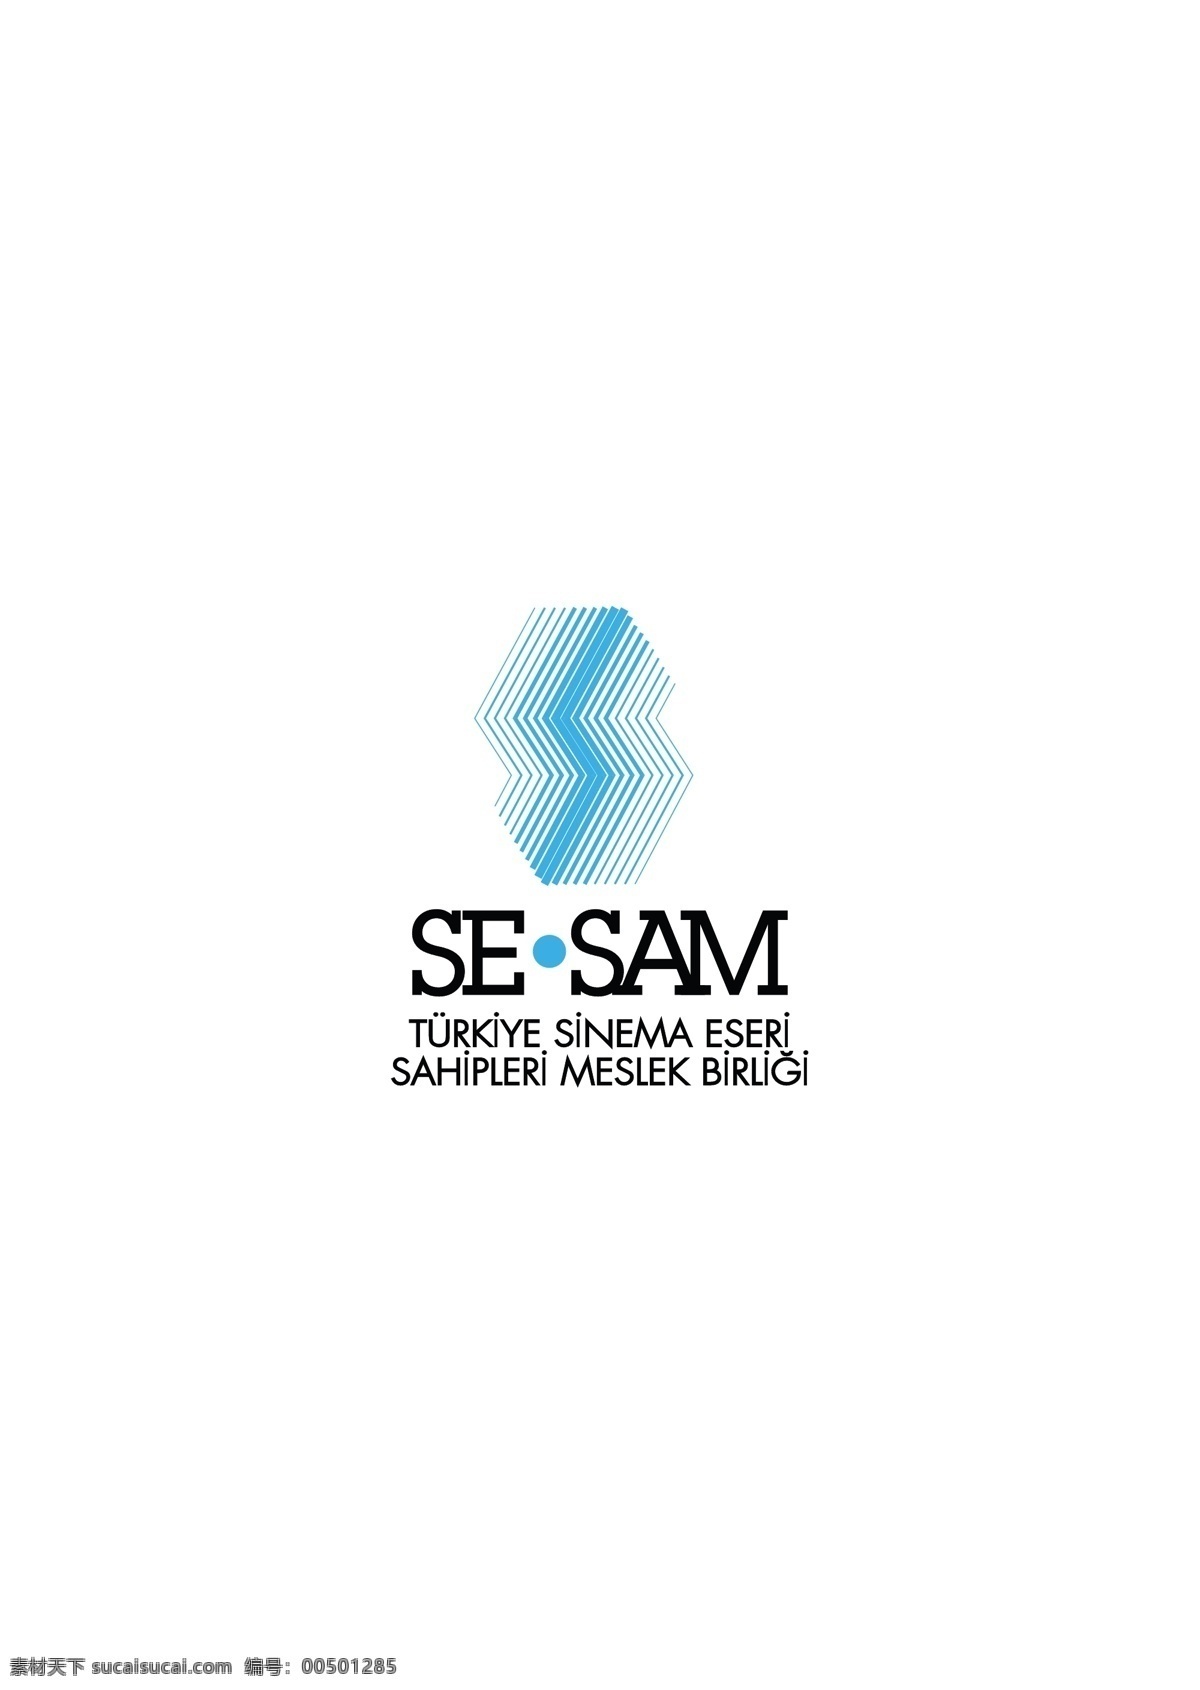 sesam logo大全 logo 设计欣赏 商业矢量 矢量下载 唱片公司 标志设计 欣赏 网页矢量 矢量图 其他矢量图